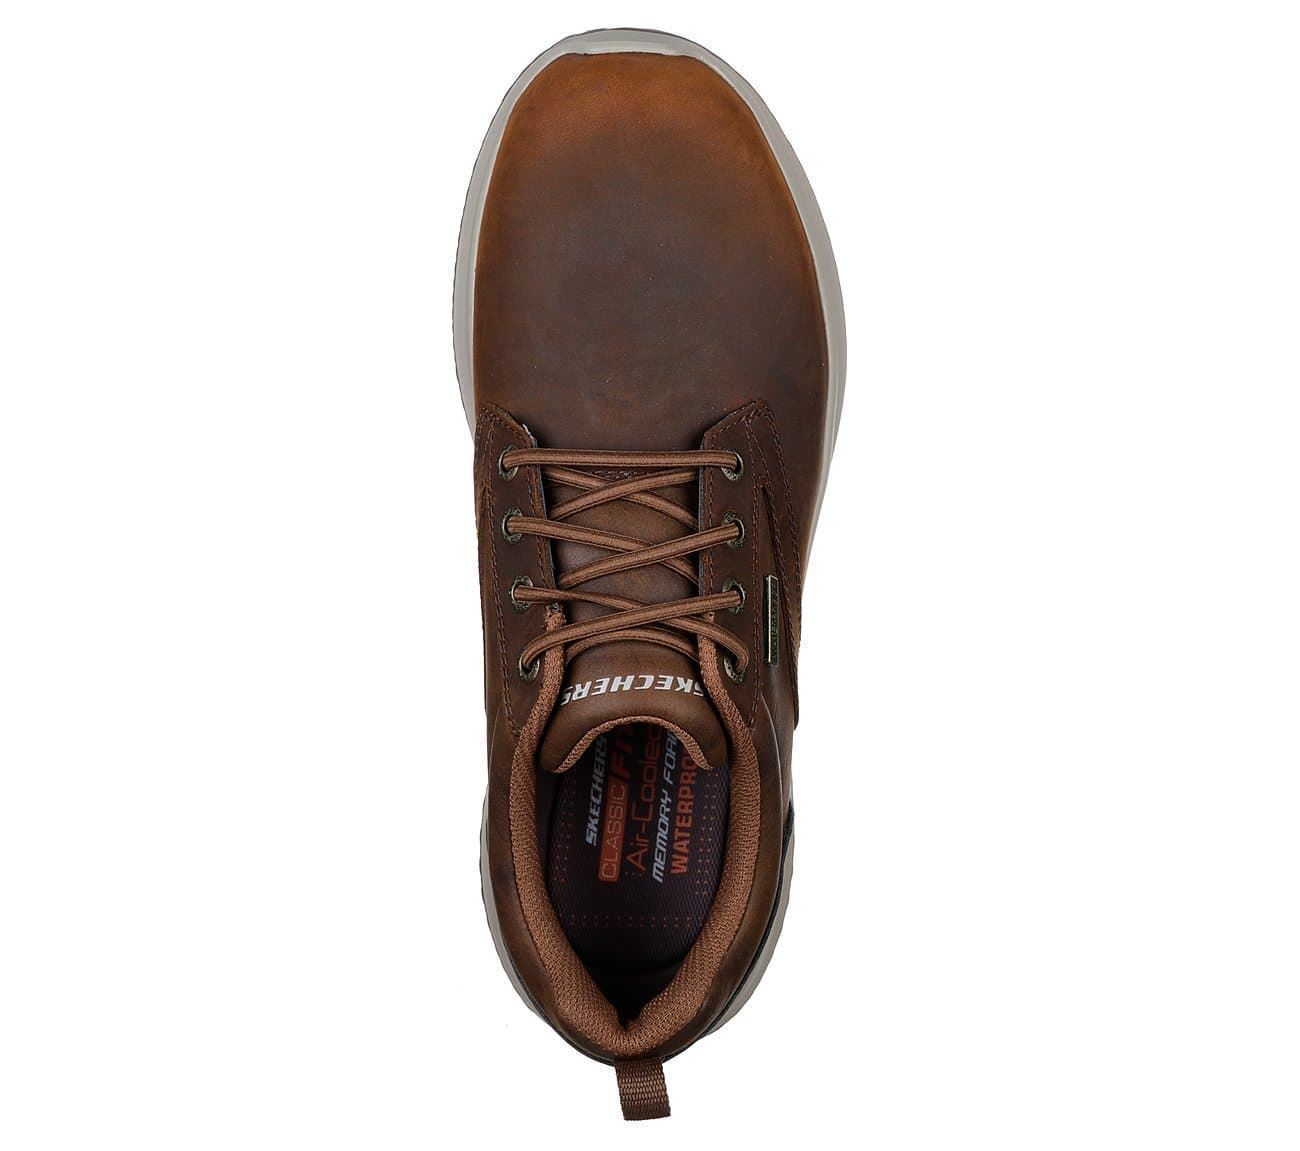 Skechers_ Zapato de piel Delson antigo chico - Imagen 3